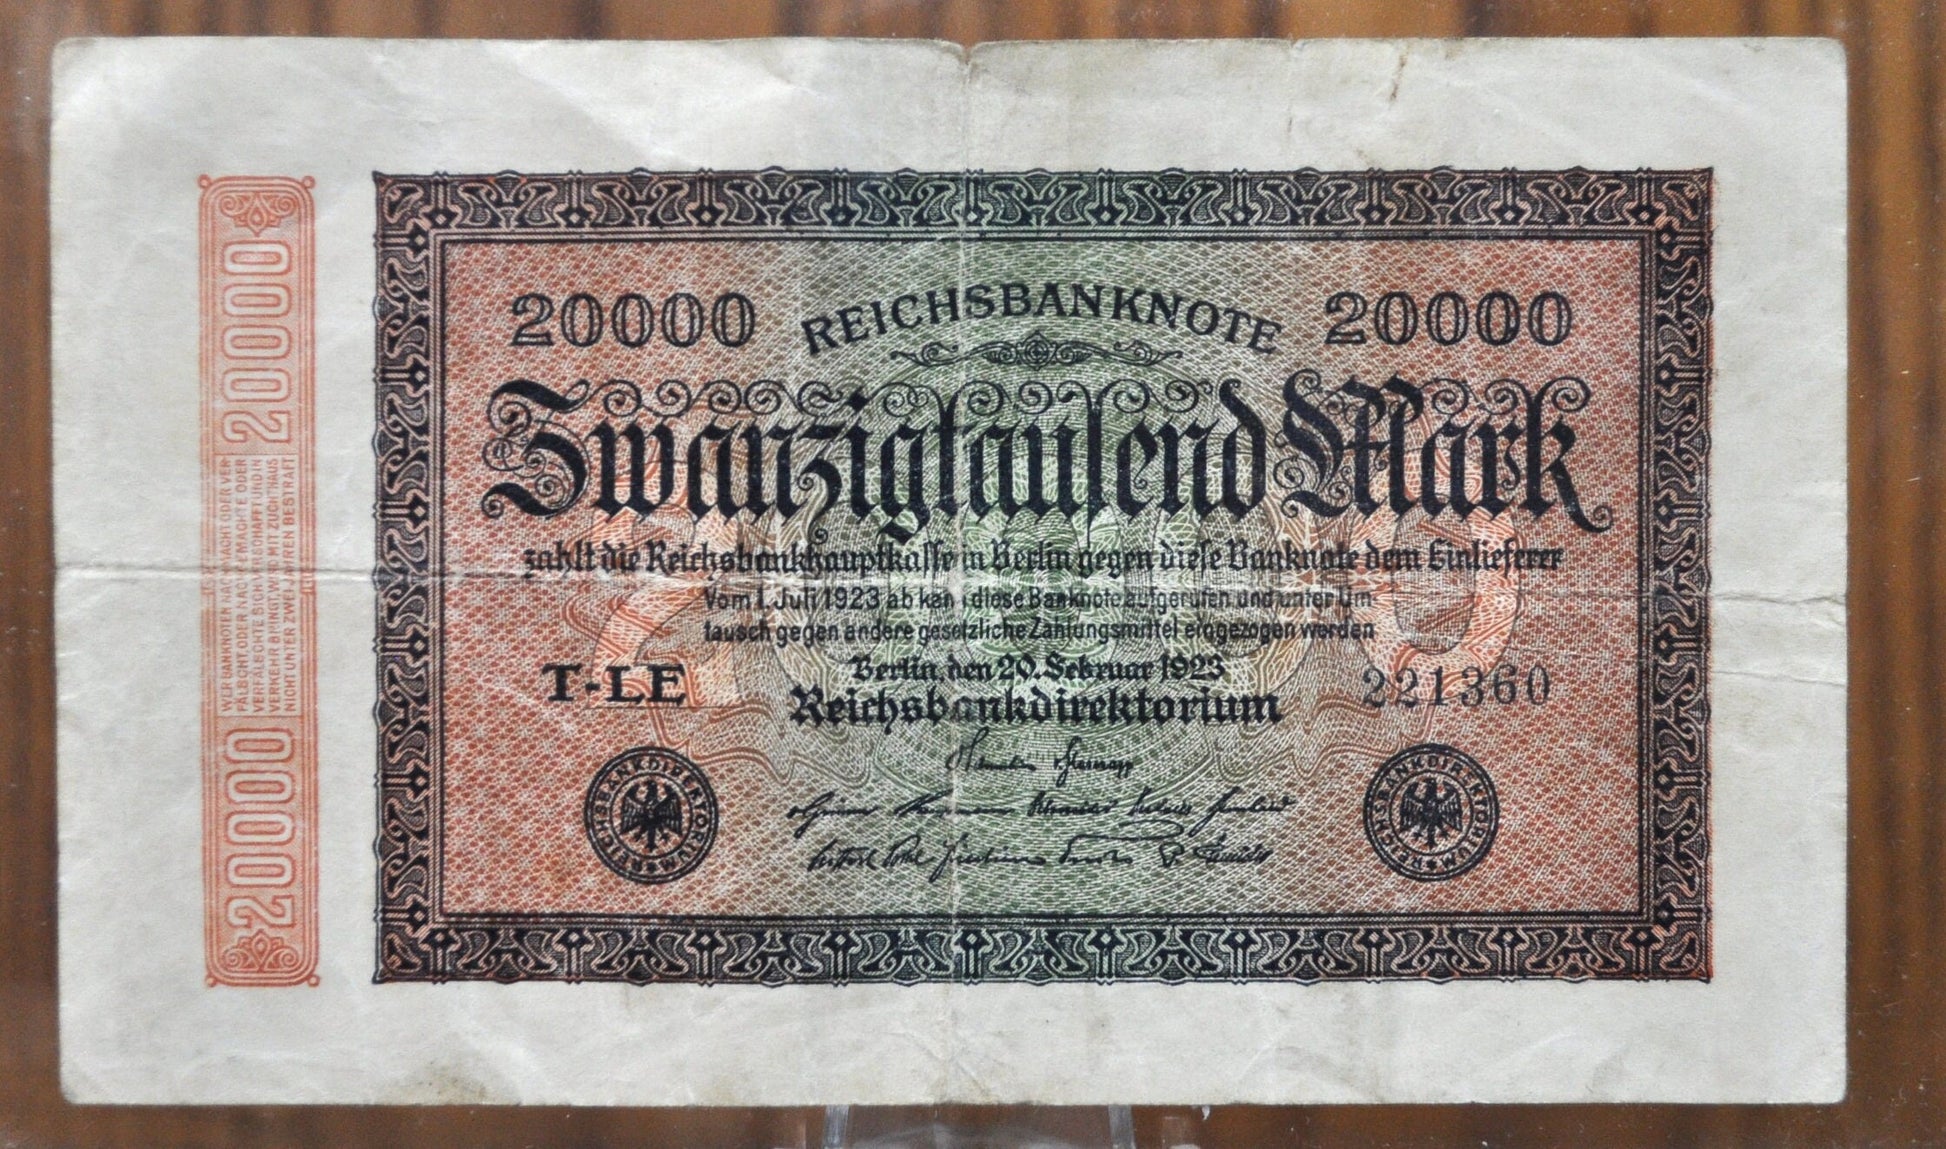 1923 20,000 Mark German Paper Note - Reichsbanknote - Great Condition - WWI era note - Twenty Thousand Mark Note